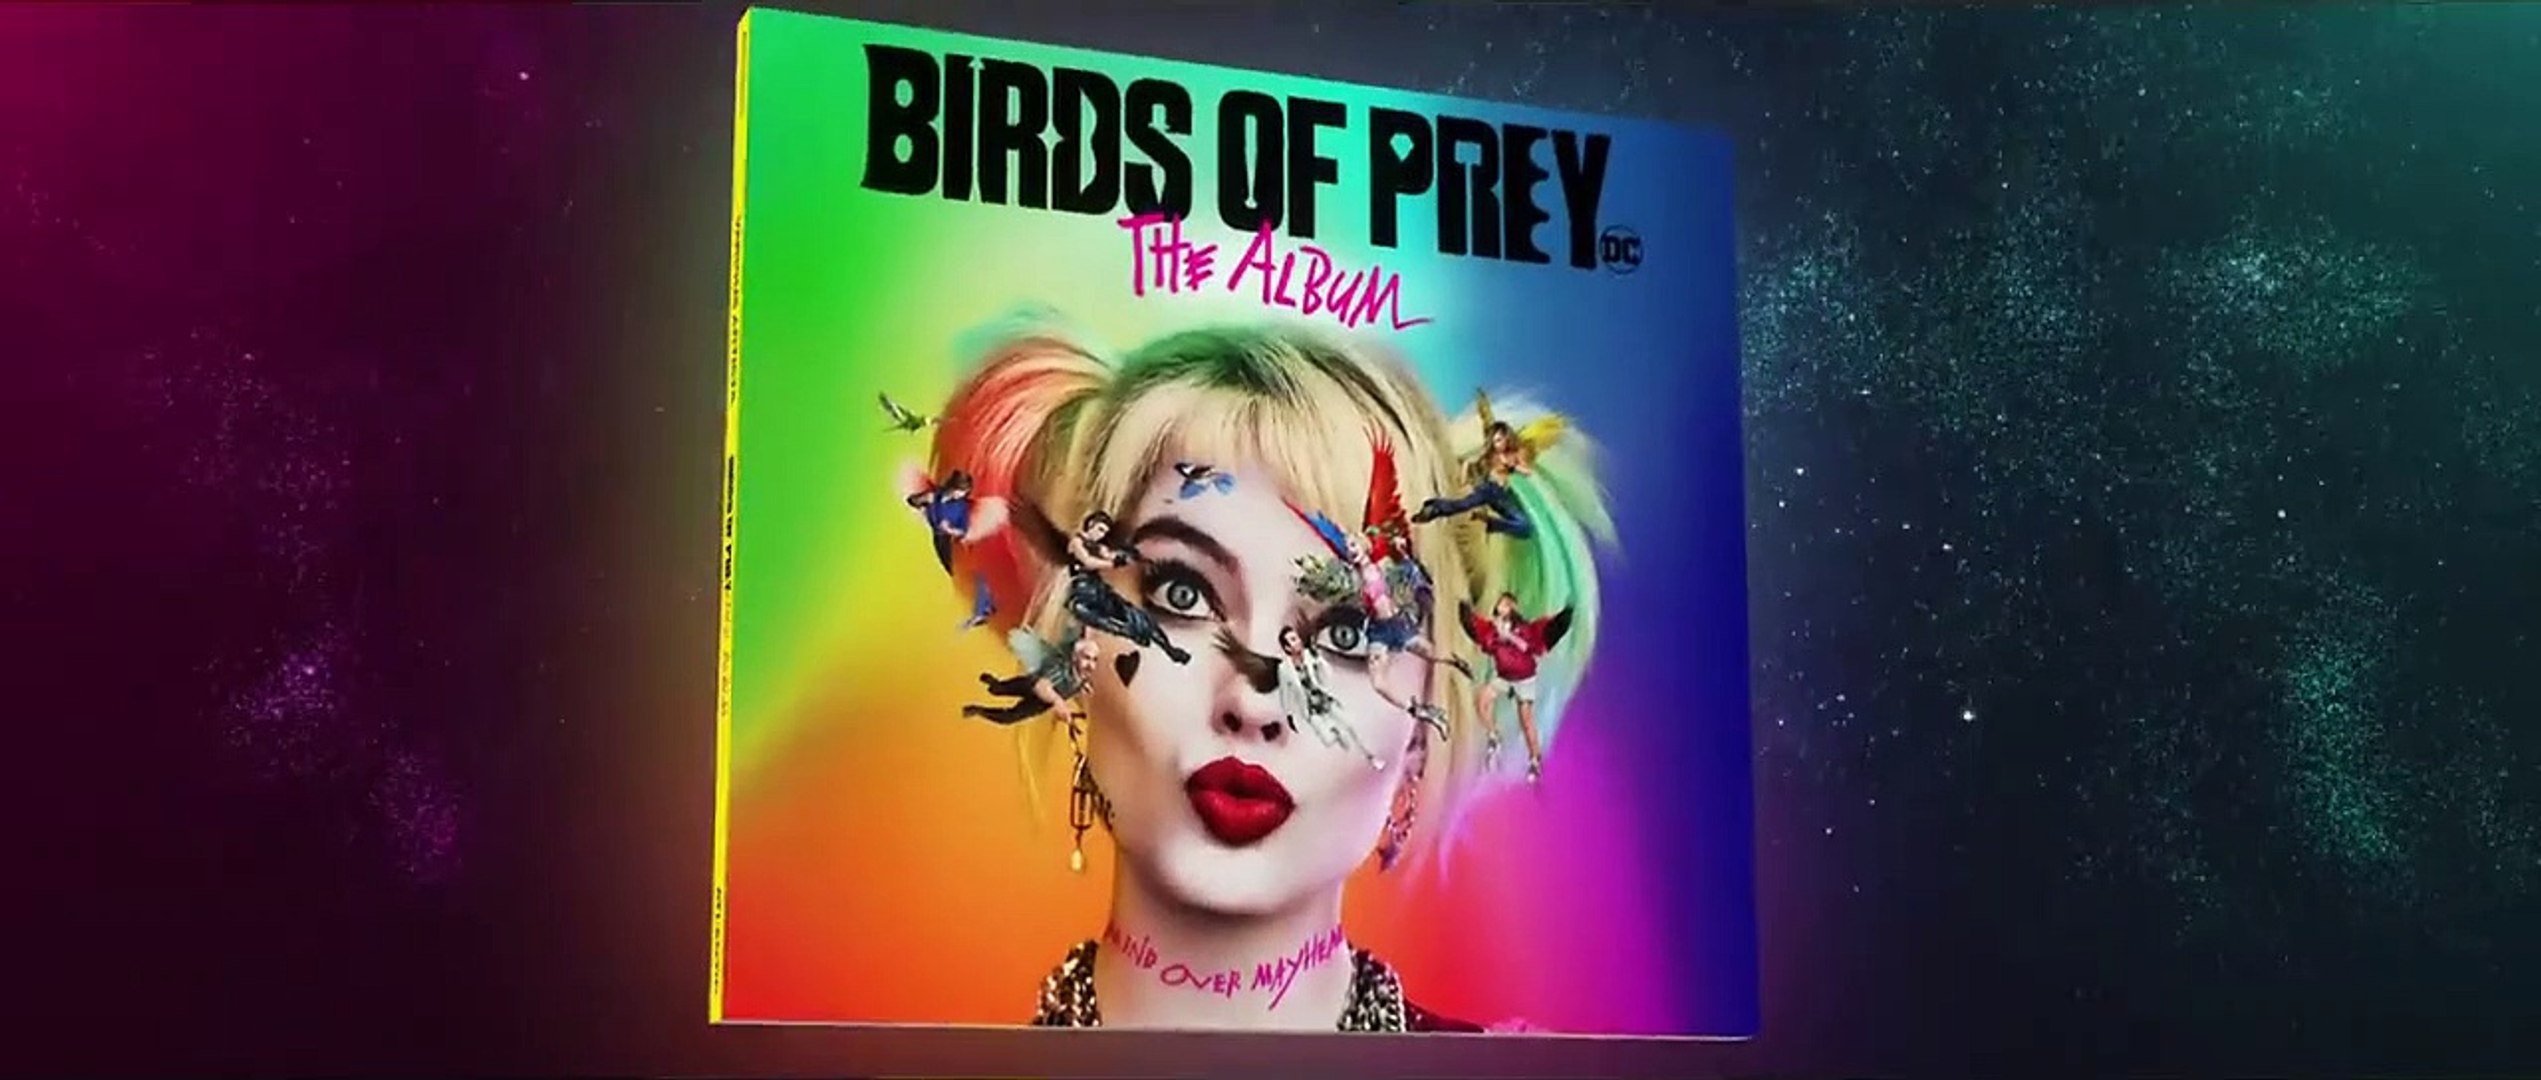 Stream BIRDS OF PREY (2020) - Trailer #1 (Music Edited Version) by TMF31